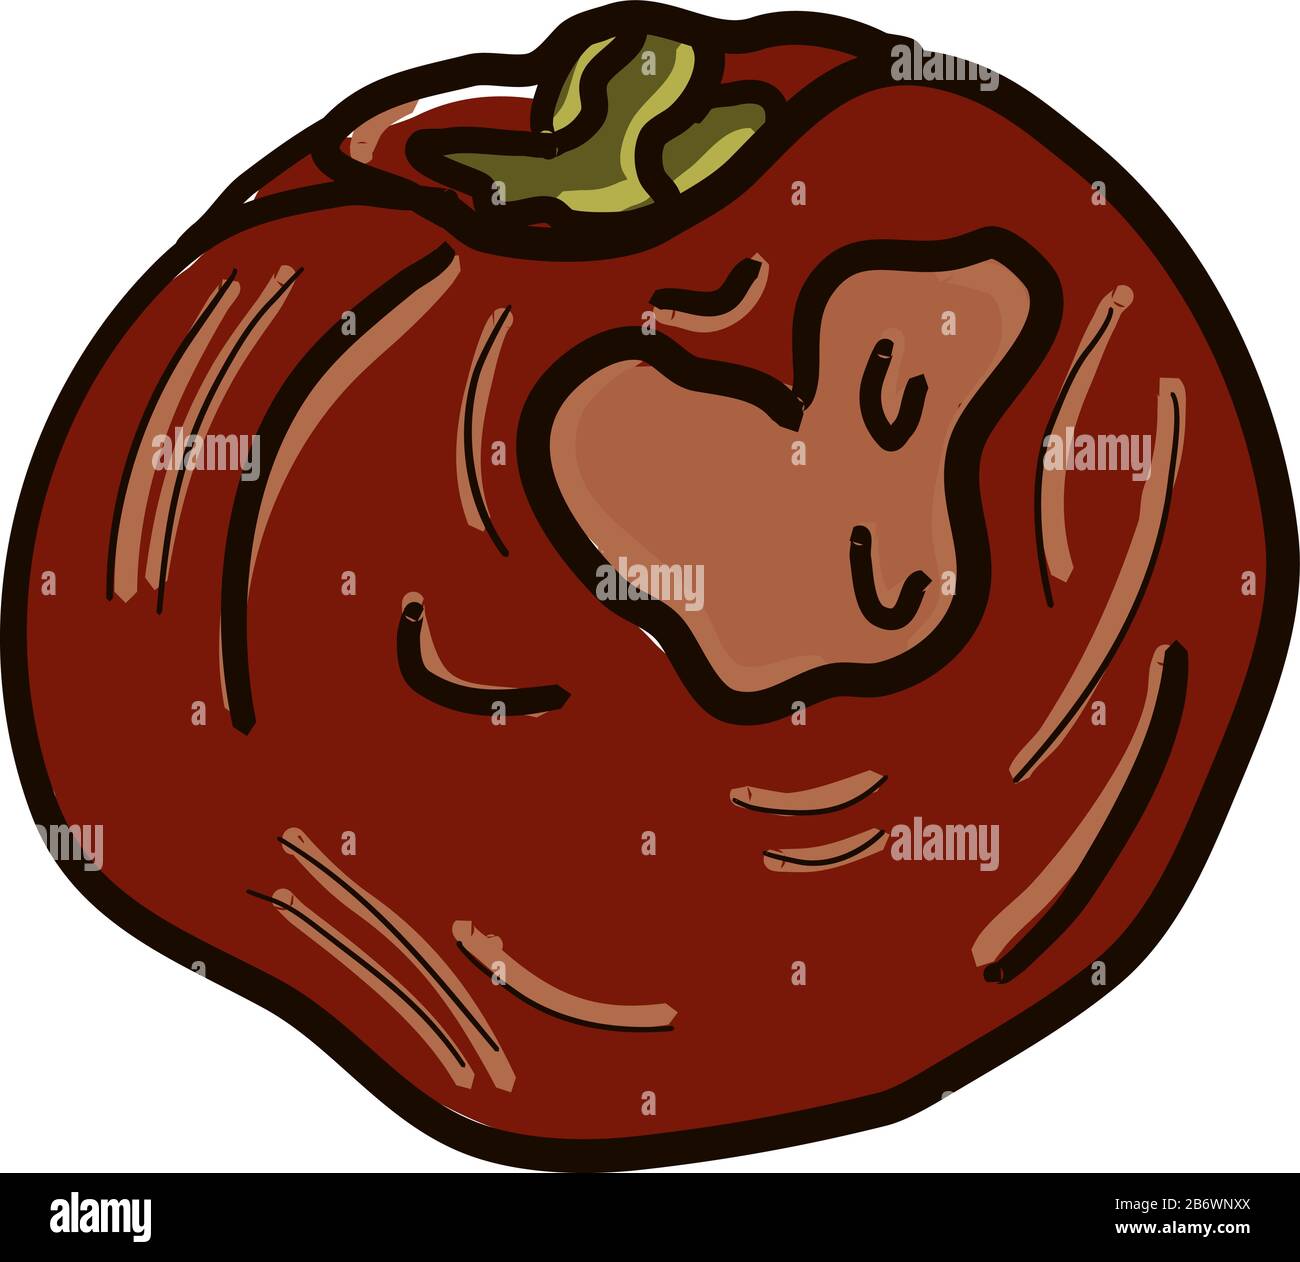 Rotten tomato, illustration, vector on white background. Stock Vector